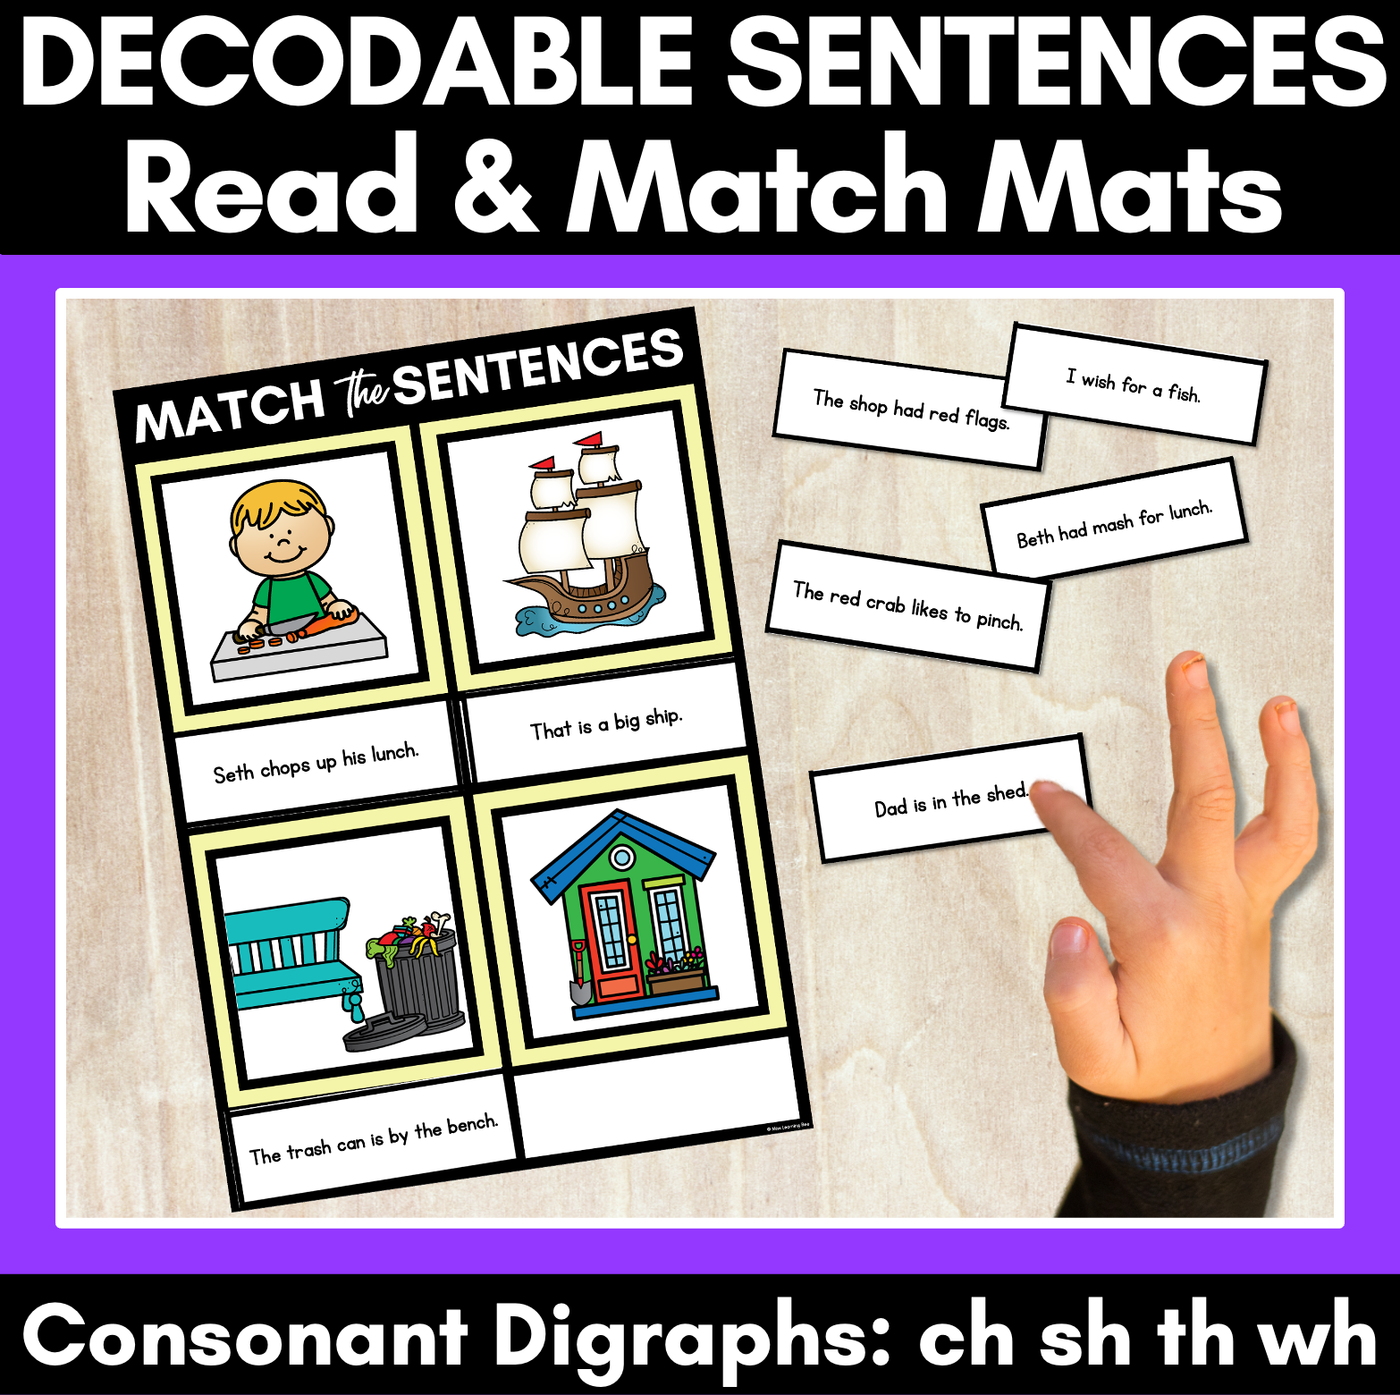 CH SH TH WH Decodable Sentences Mats - Read & Match